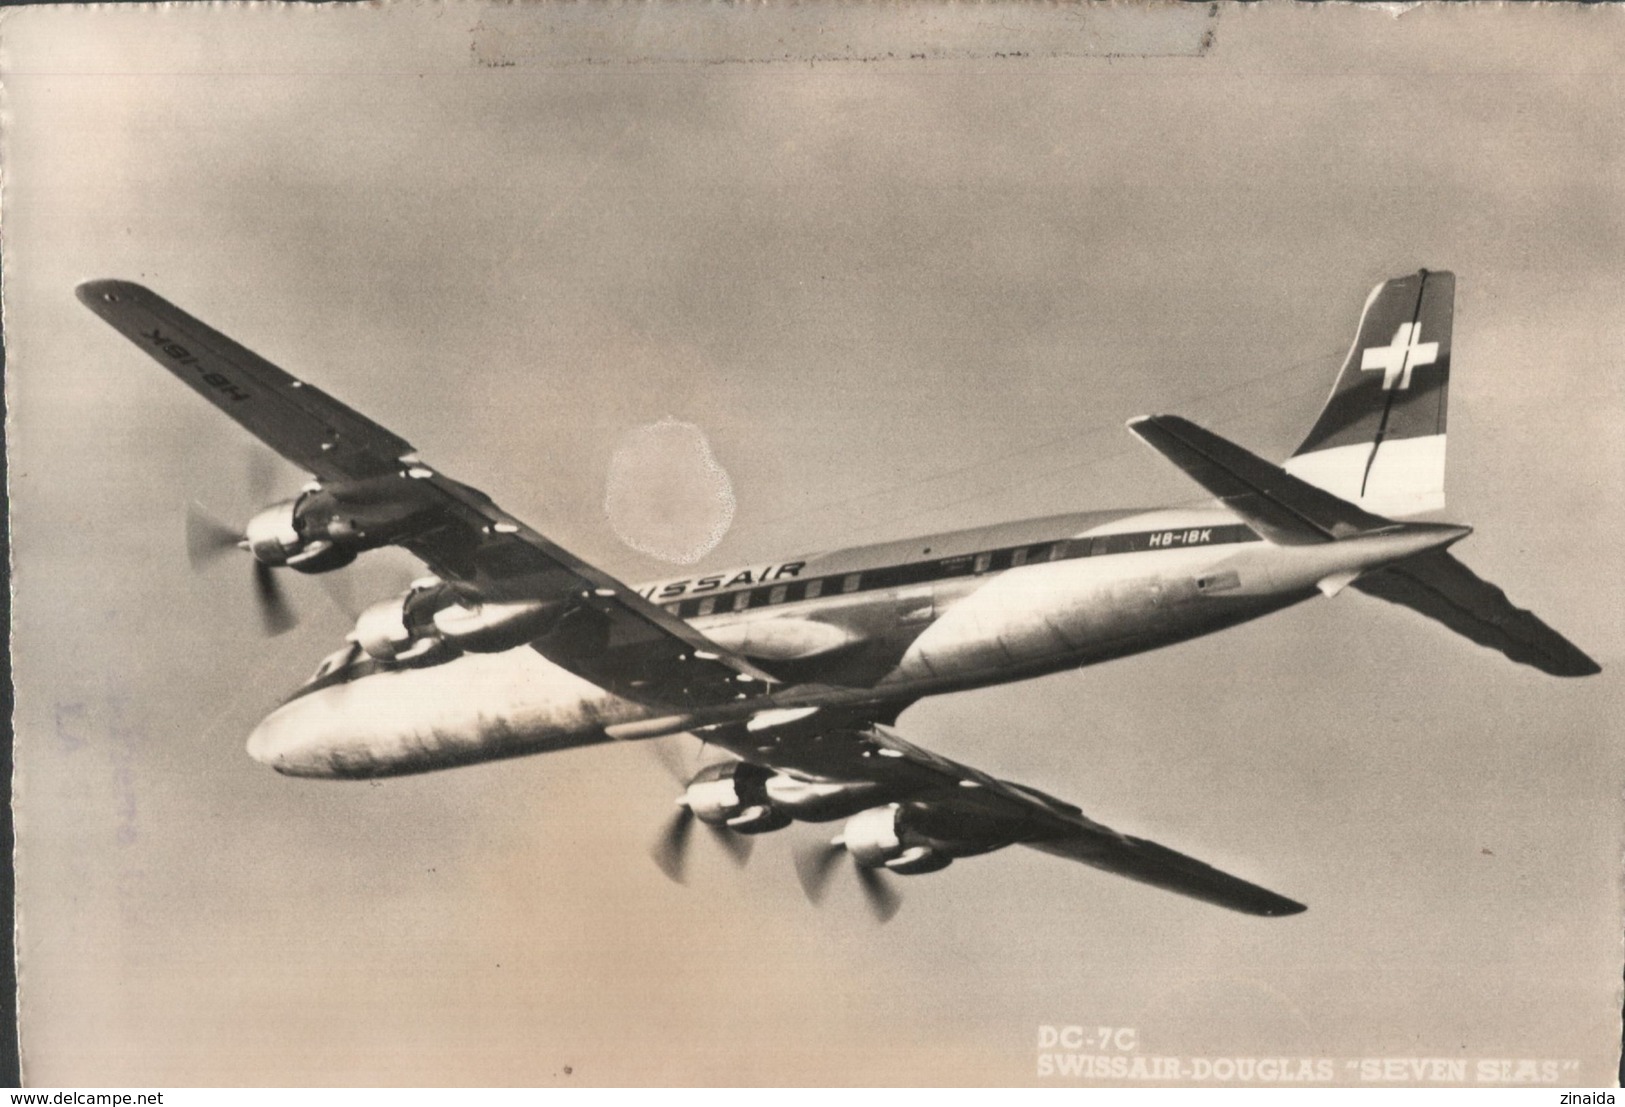 CARTE POSTALE - AVION DC 7C SWISSAIR DOUGLAS  "SEVEN SEAS" - 1946-....: Ere Moderne